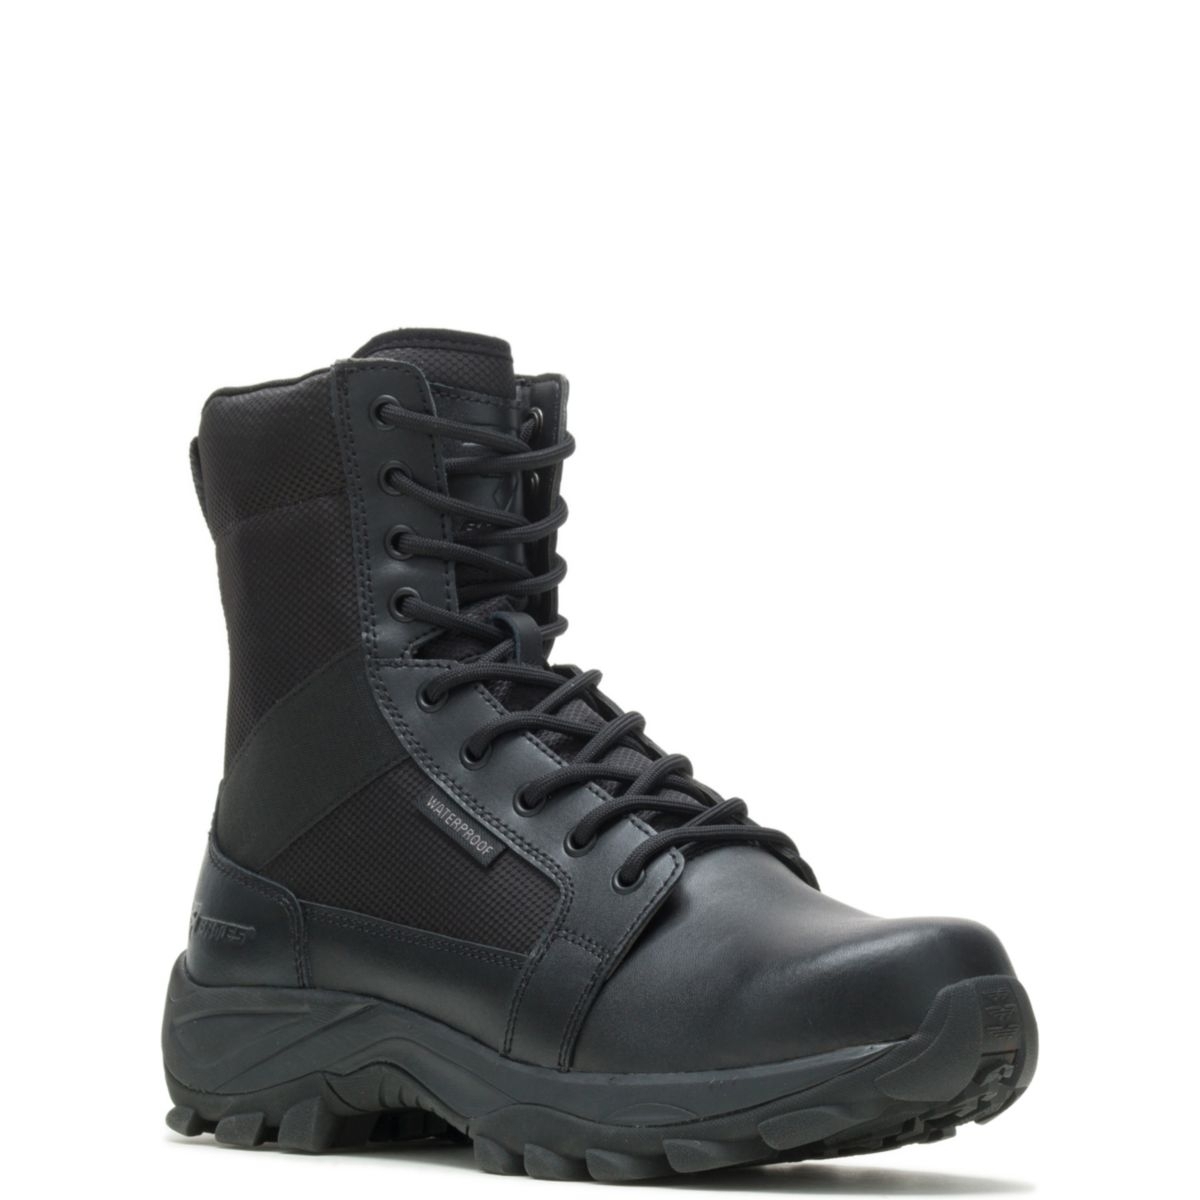 Bates Men's Fuse 8-inch Side Zip Waterproof Boot Black - E06508 BLACK - BLACK, 8